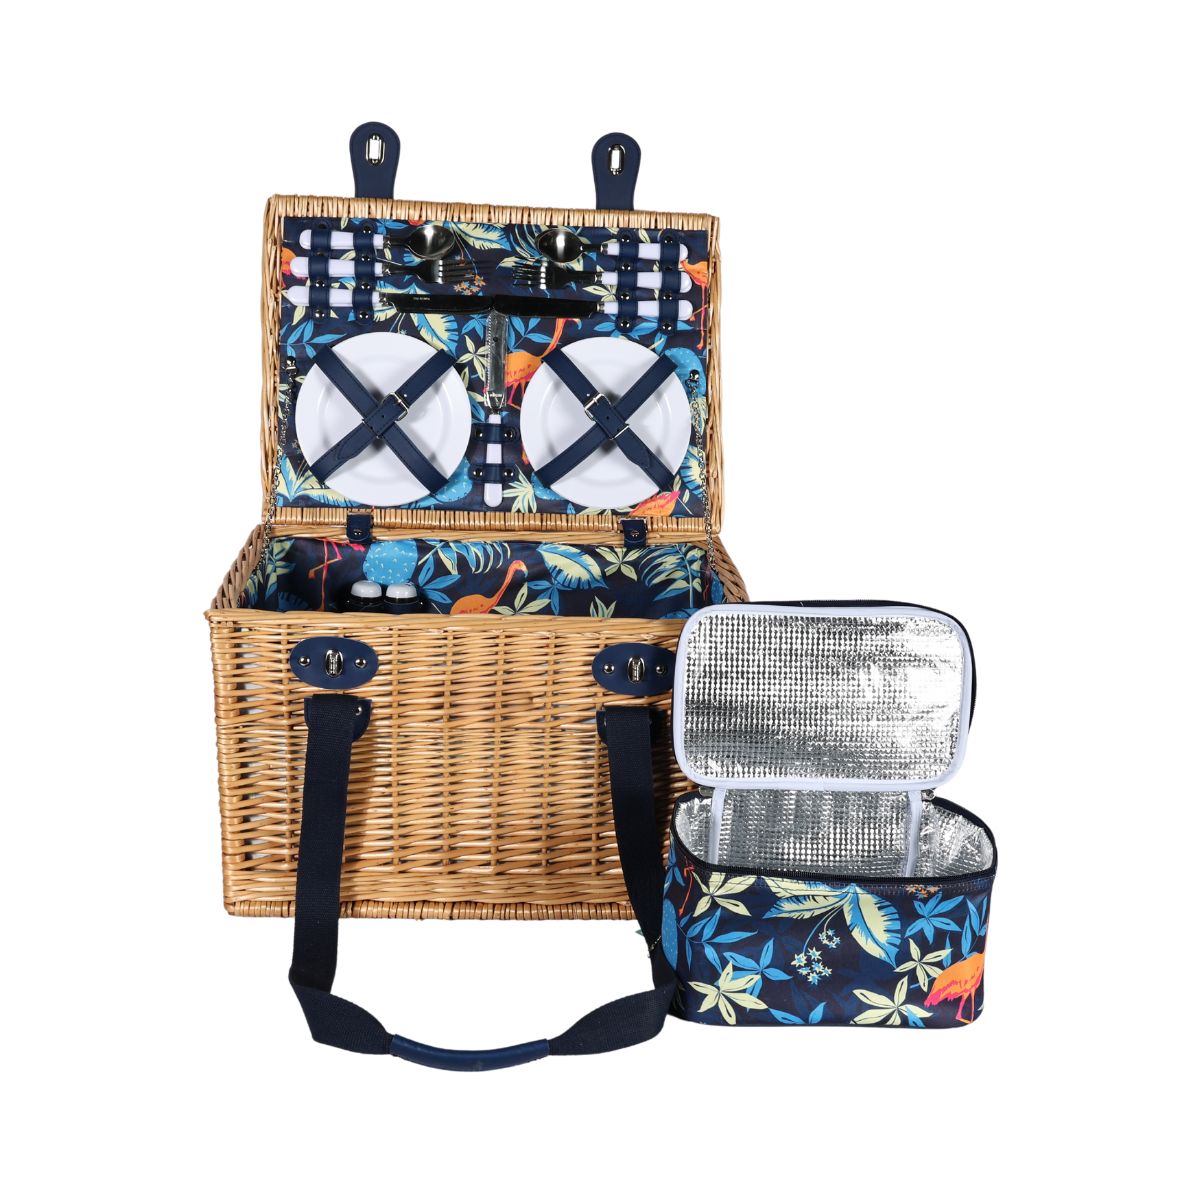 Picnic - Cos de picnic pentru 4 persoane din rachita naturala maro deschis cu vesela, tacamuri si geanta frigorifica  ZQ23-1148, hectarul.ro